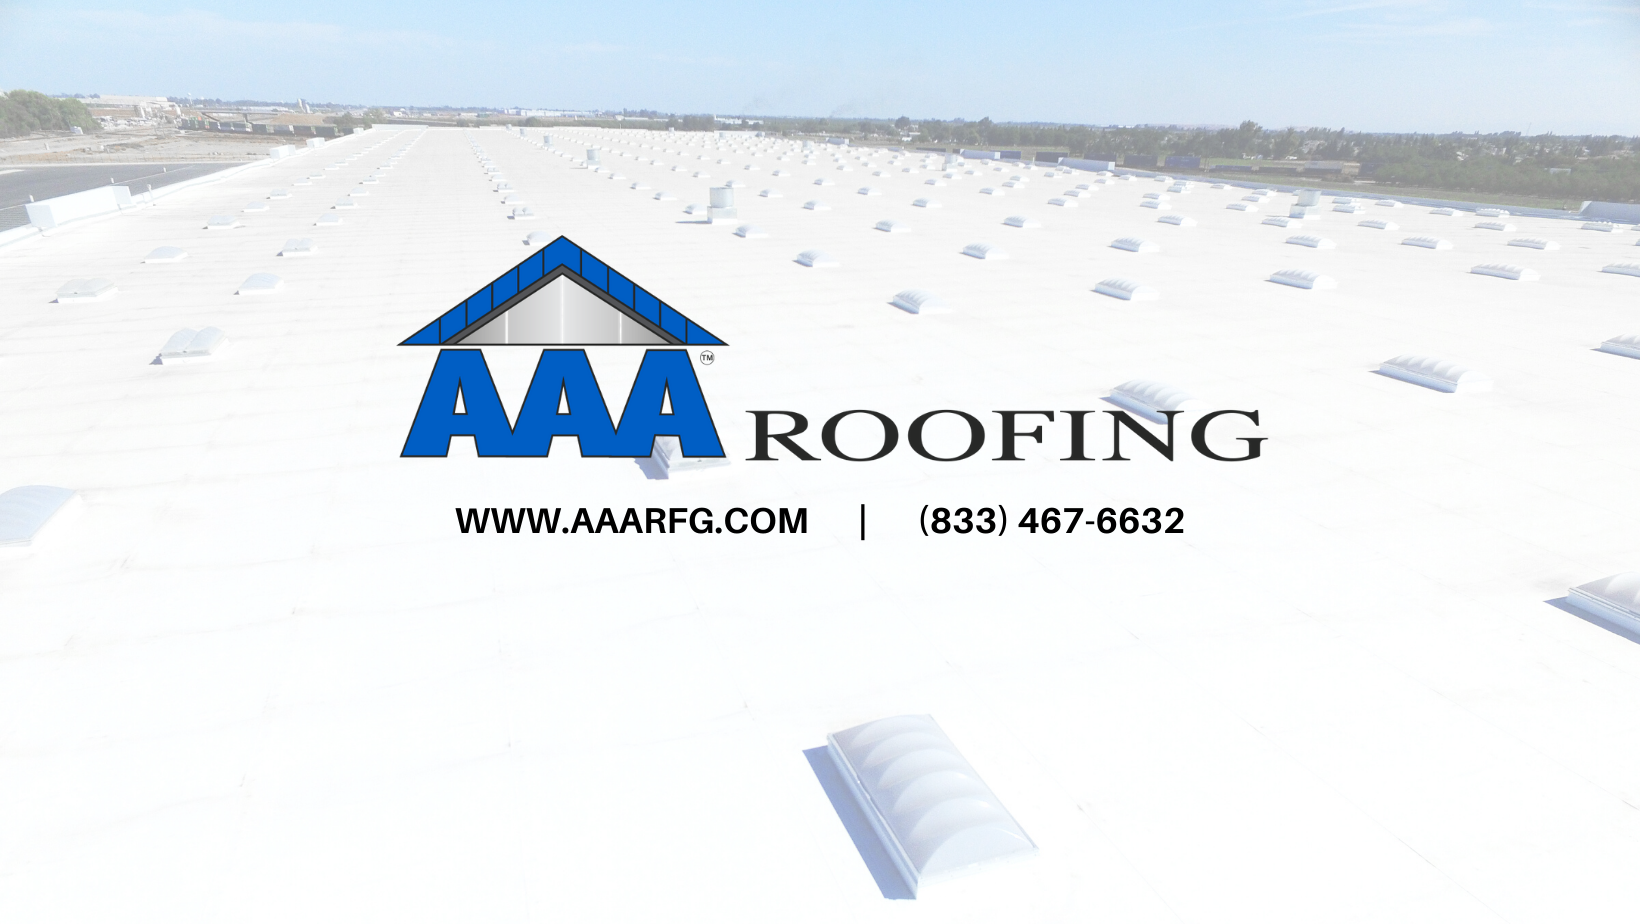 AAA Roofing and Waterproofing, LLC.